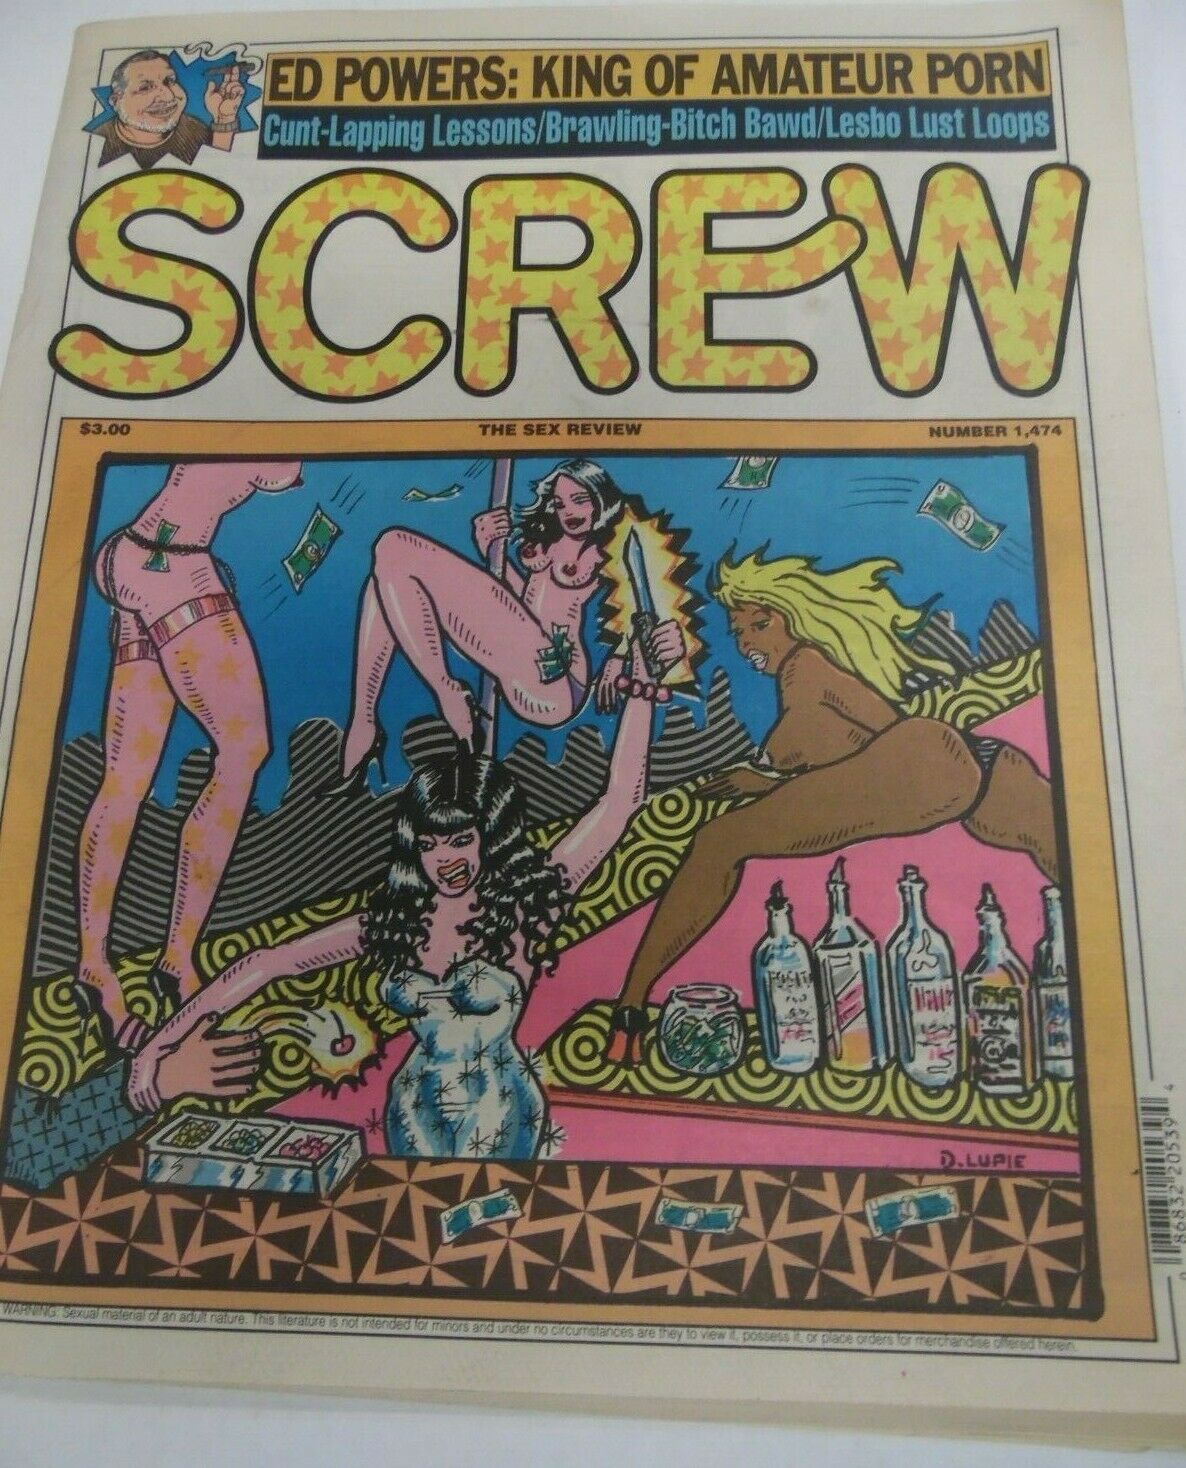 Screw Newspaper Ed Powers King Of Amateur Porn #1474 June 2 121419lm-e photo